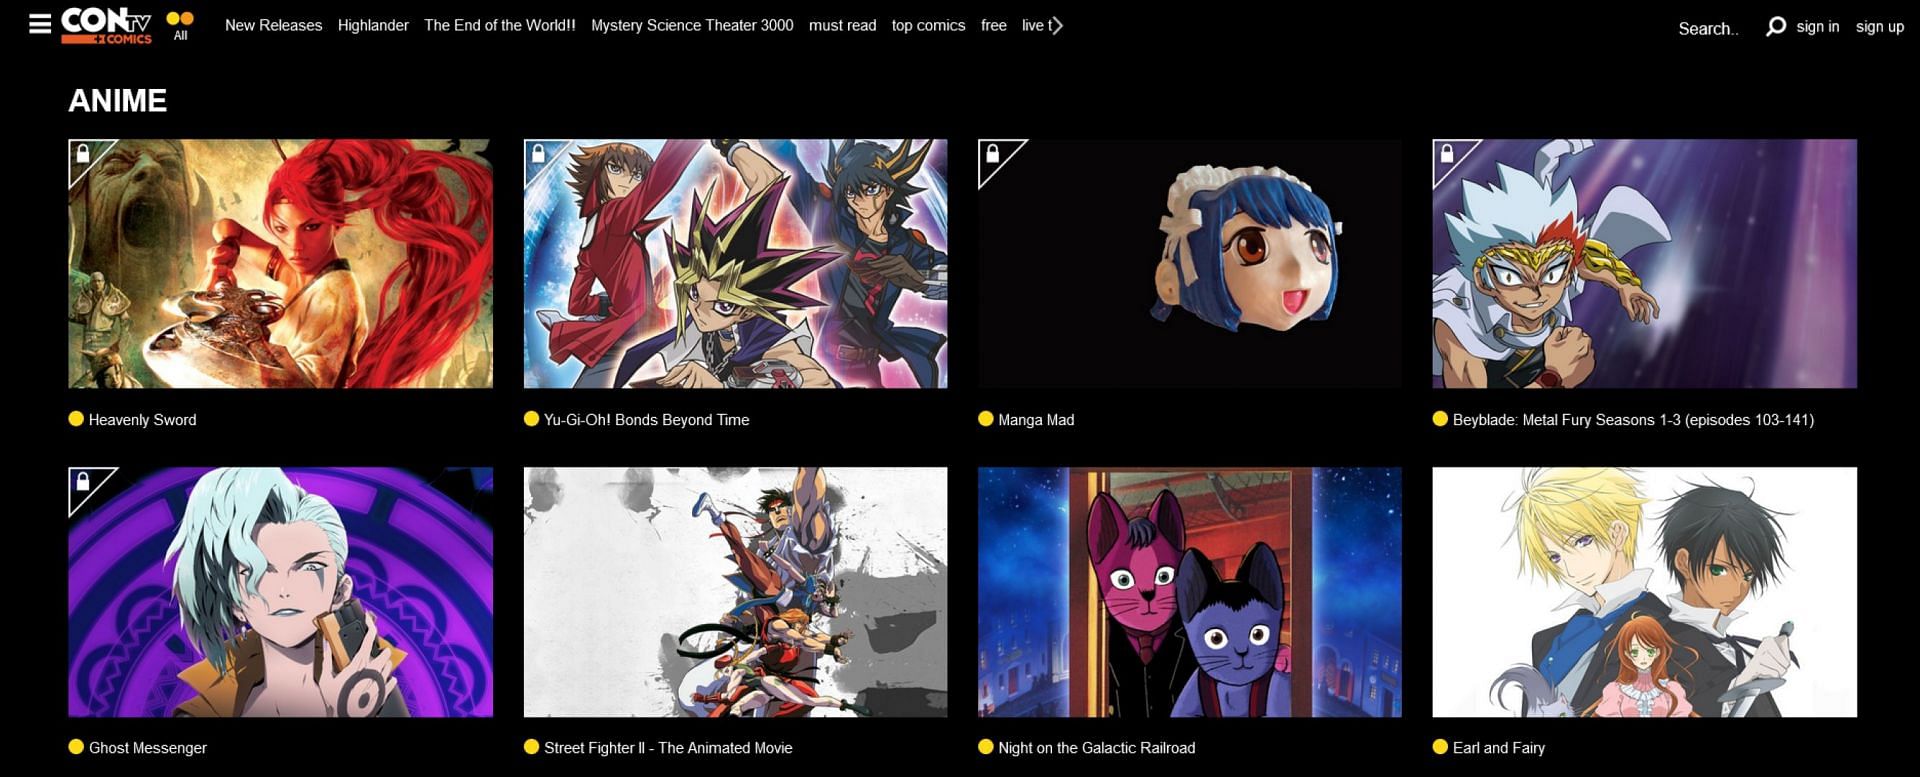 CONTV anime front page (Image via Cinedigm)